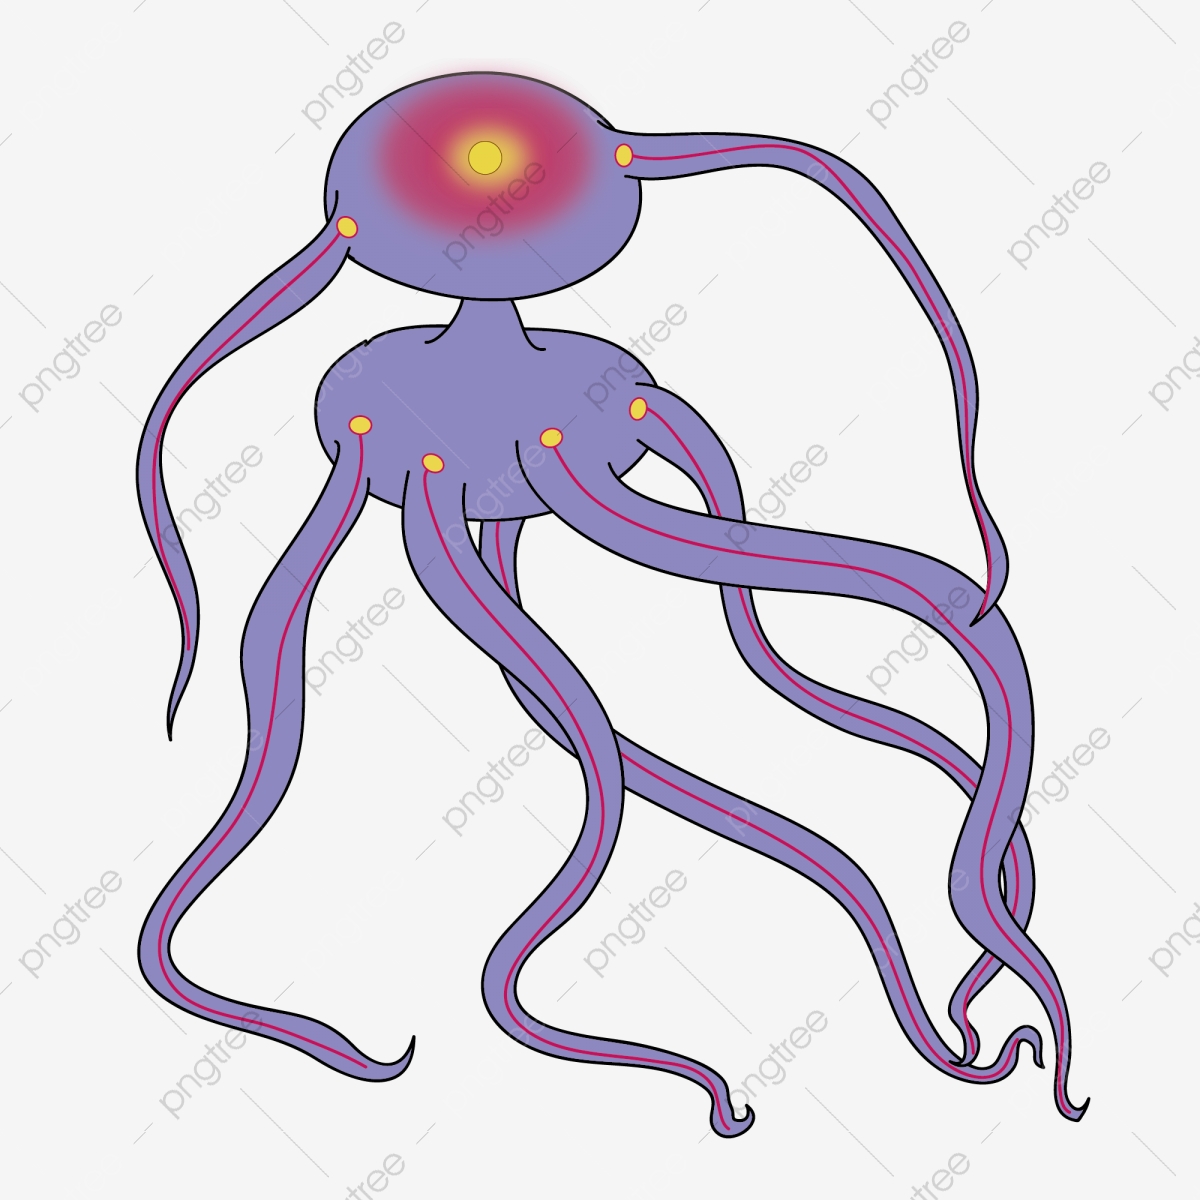 pngtree-long-tentacles-cute-bacteria-illustration-png-image_4541419.jpg